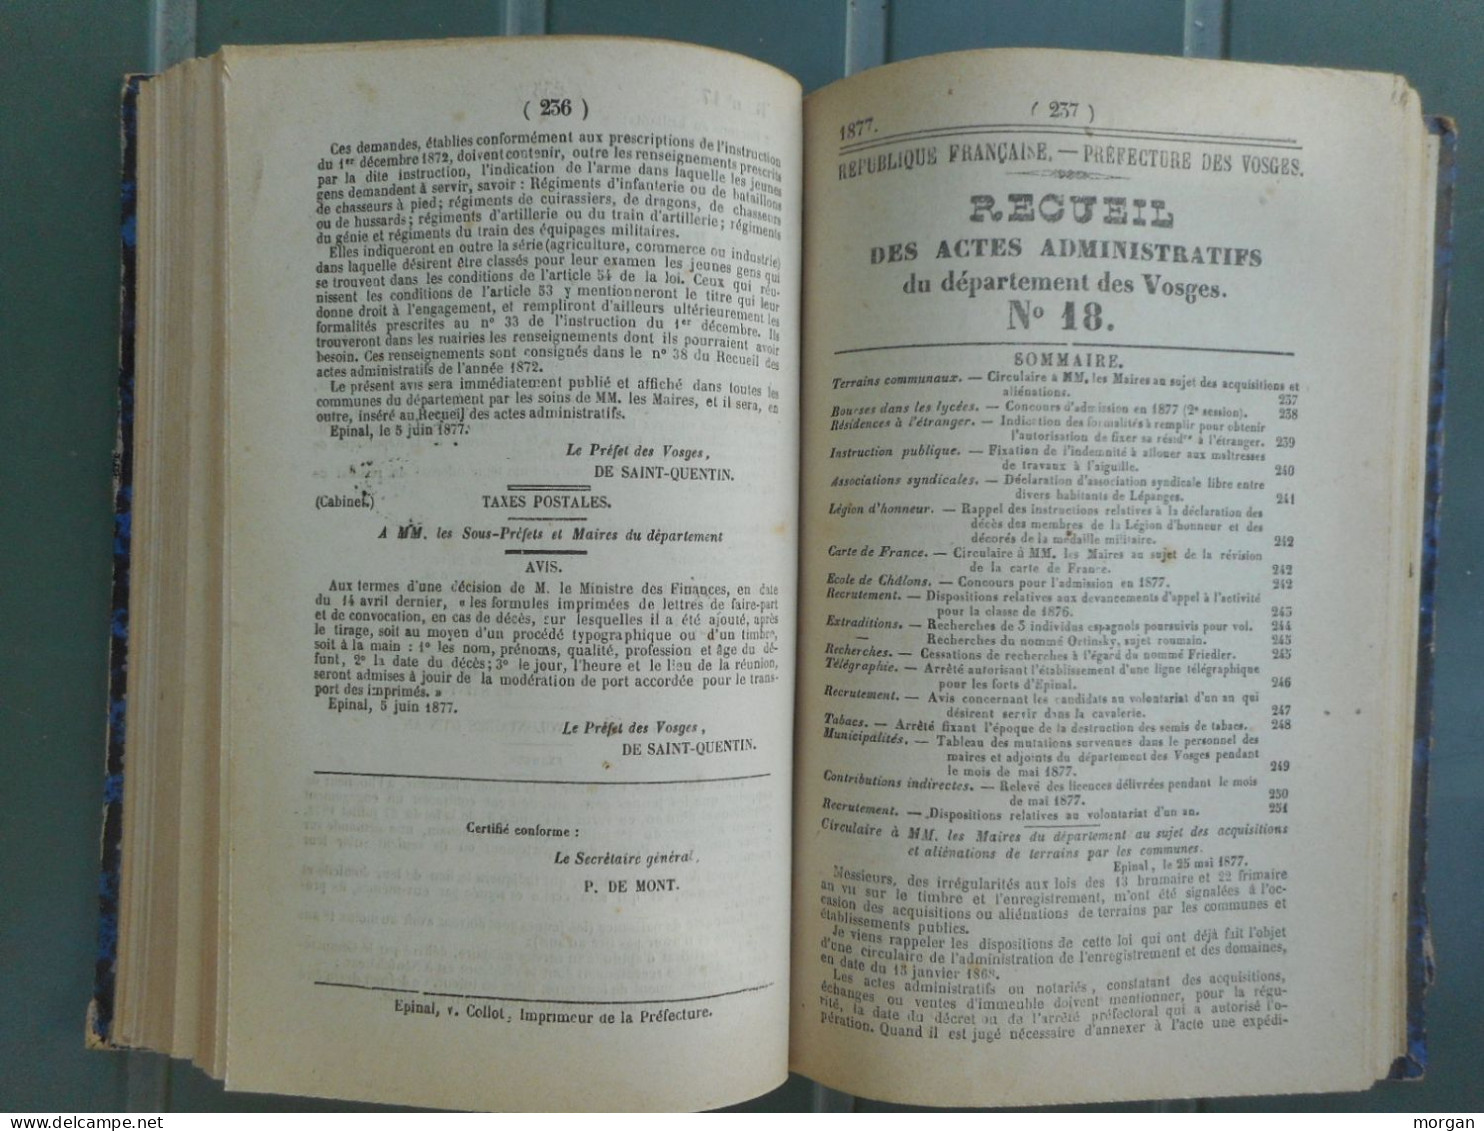 LORRAINE - VOSGES, 1877 - RECUEIL DES ACTES ADMINISTRATIFS DU DEPARTEMENT DES VOSGES ANNEE 1877